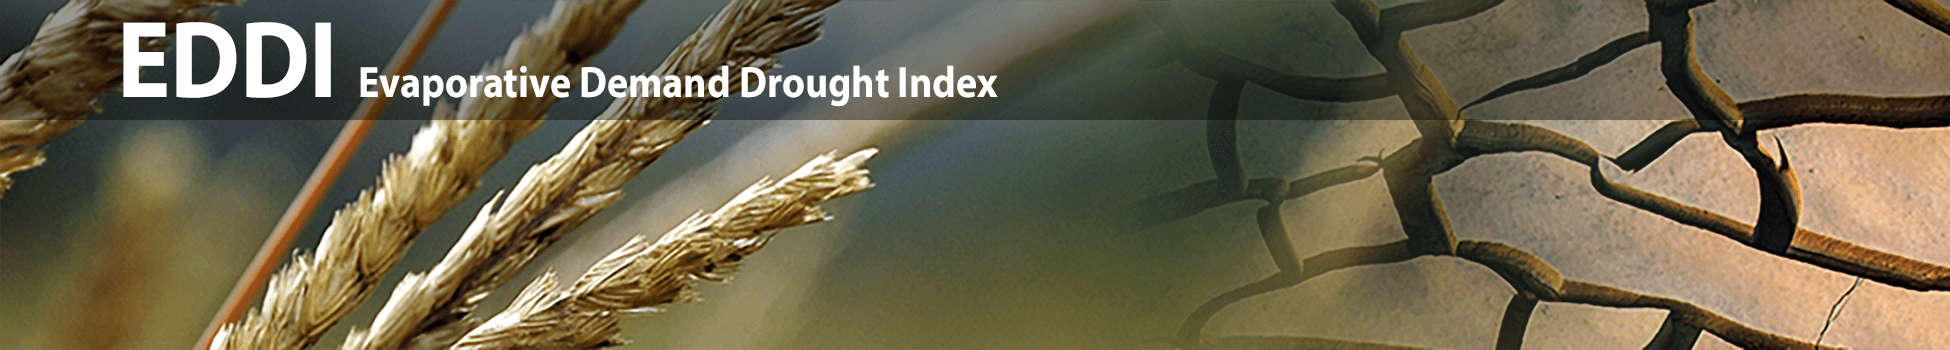 Evaporative Demand Drought Index (EDDI)